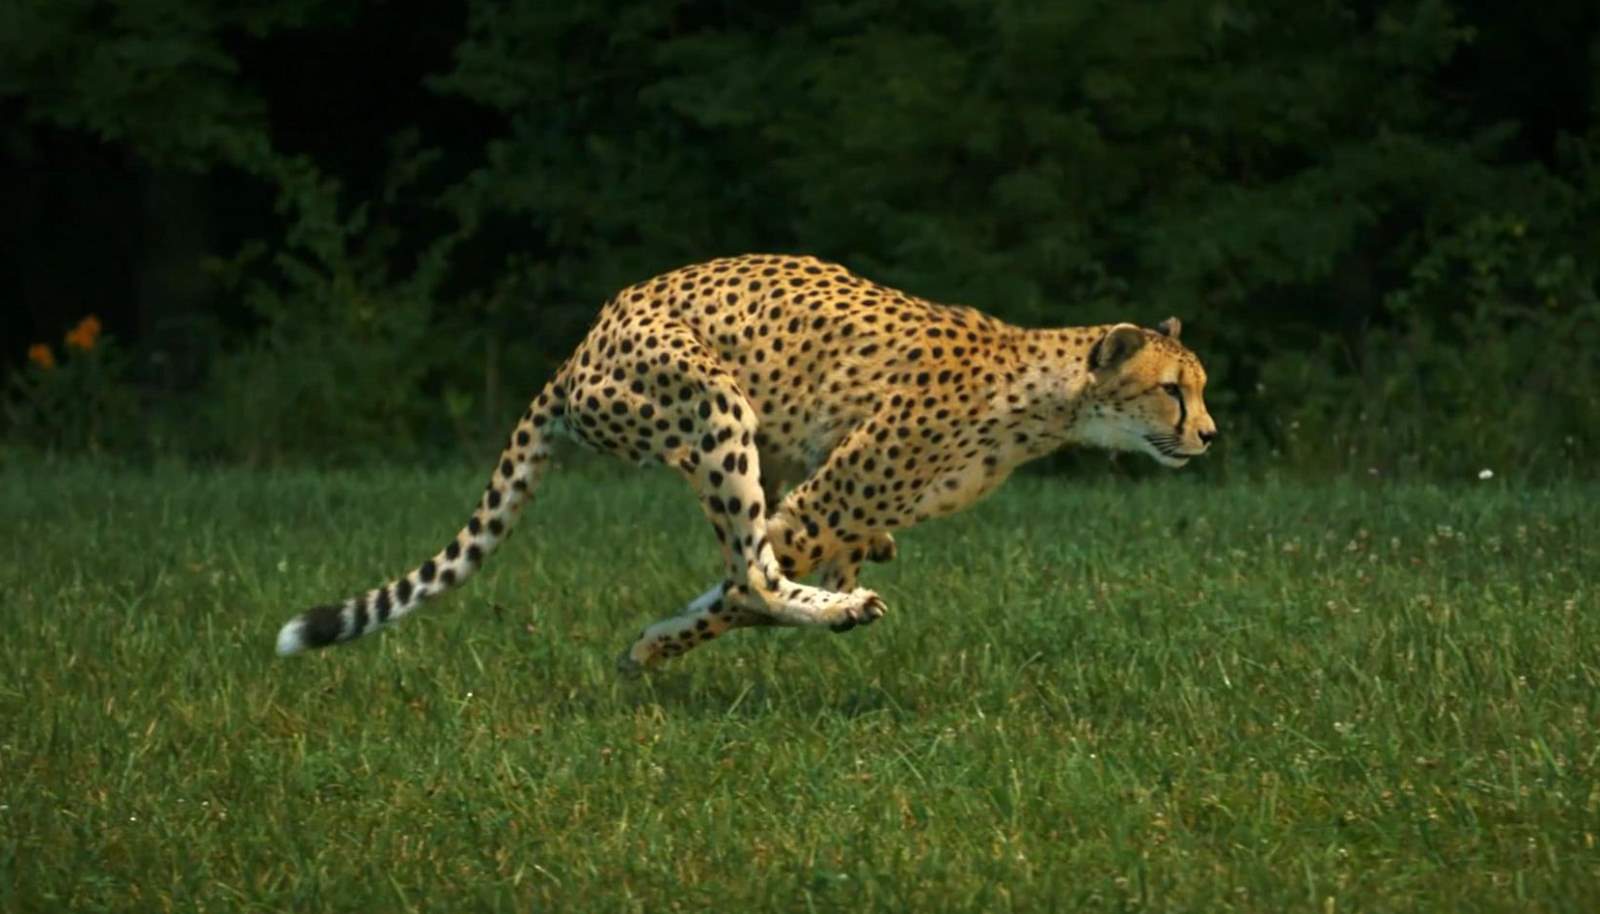 Fastest land animals: Sarah the cheetah, running